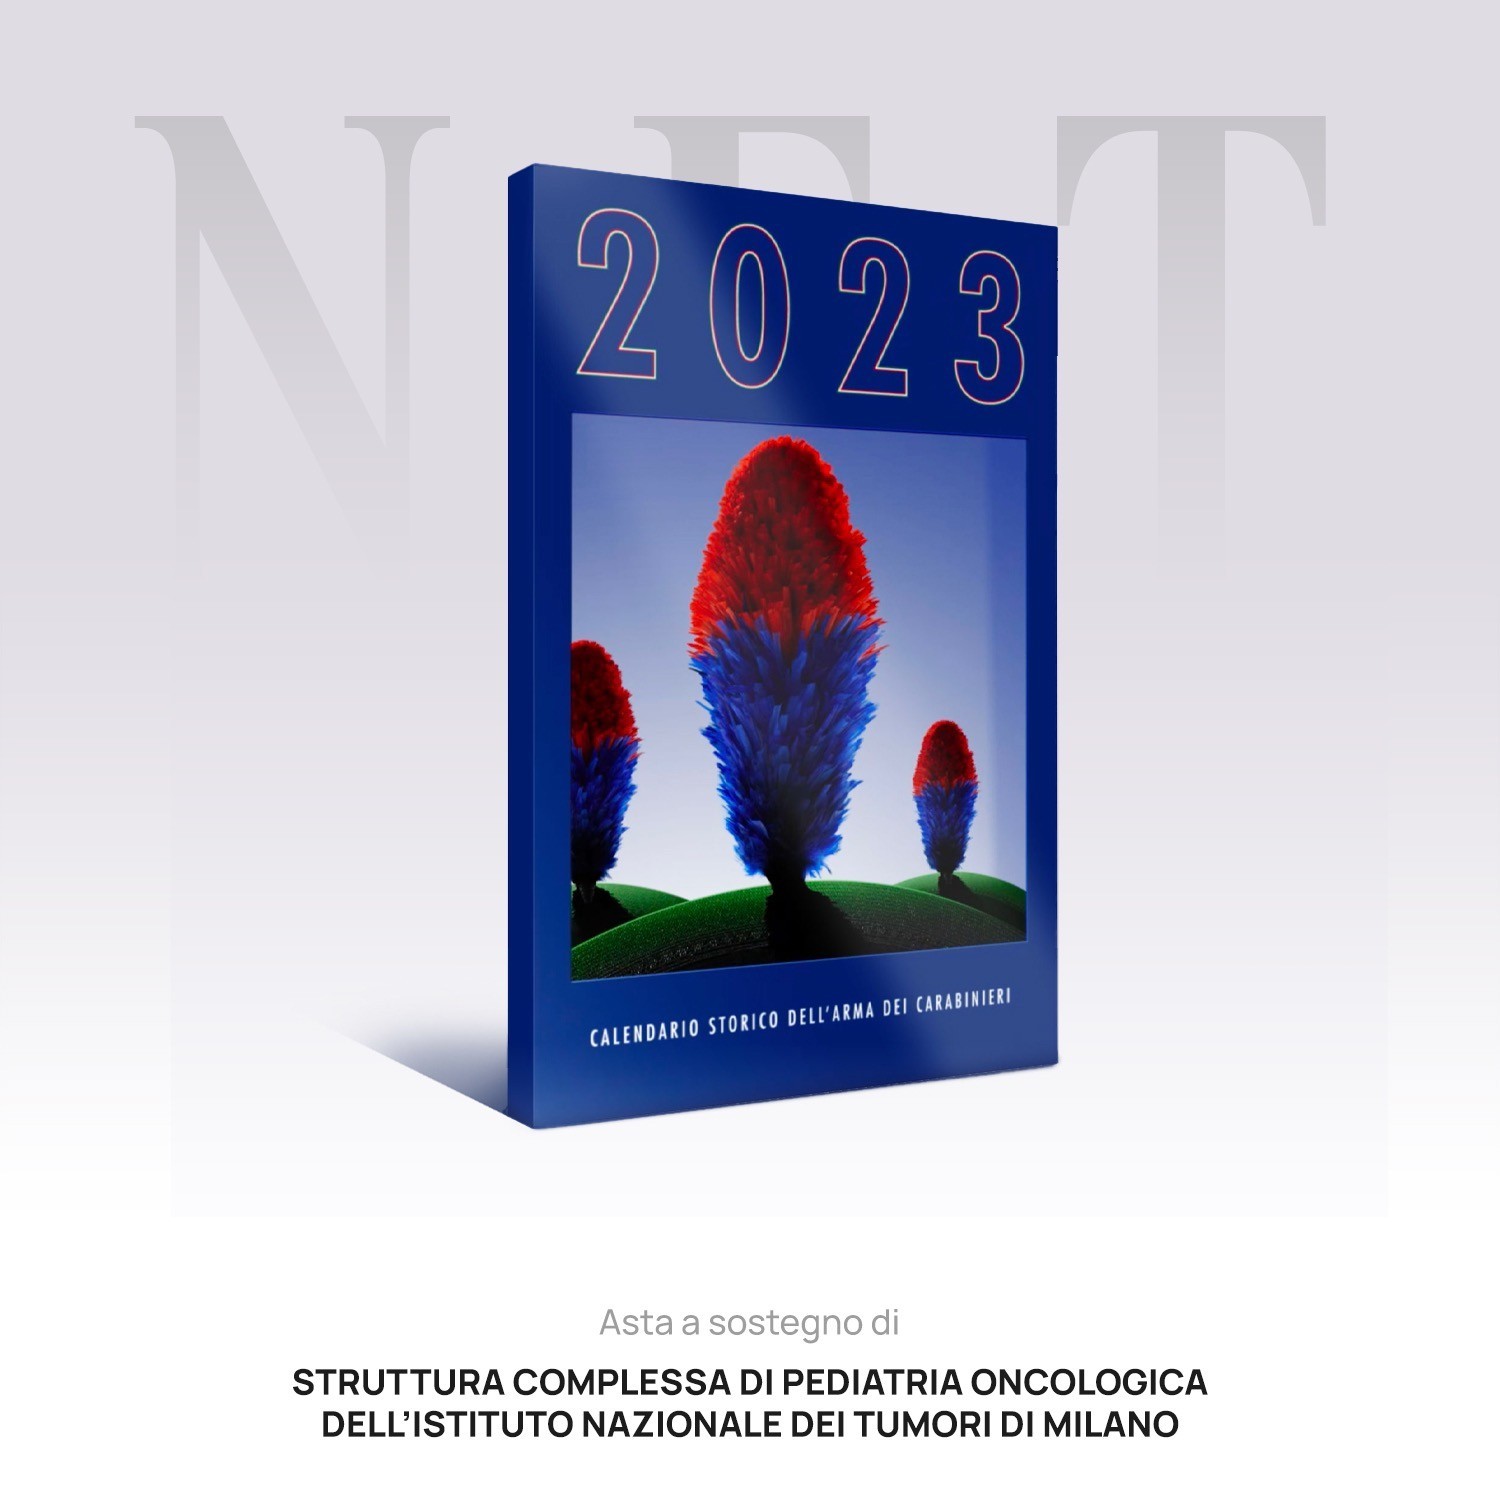 NFT and Print of Carabinieri Historical Calendar 2023